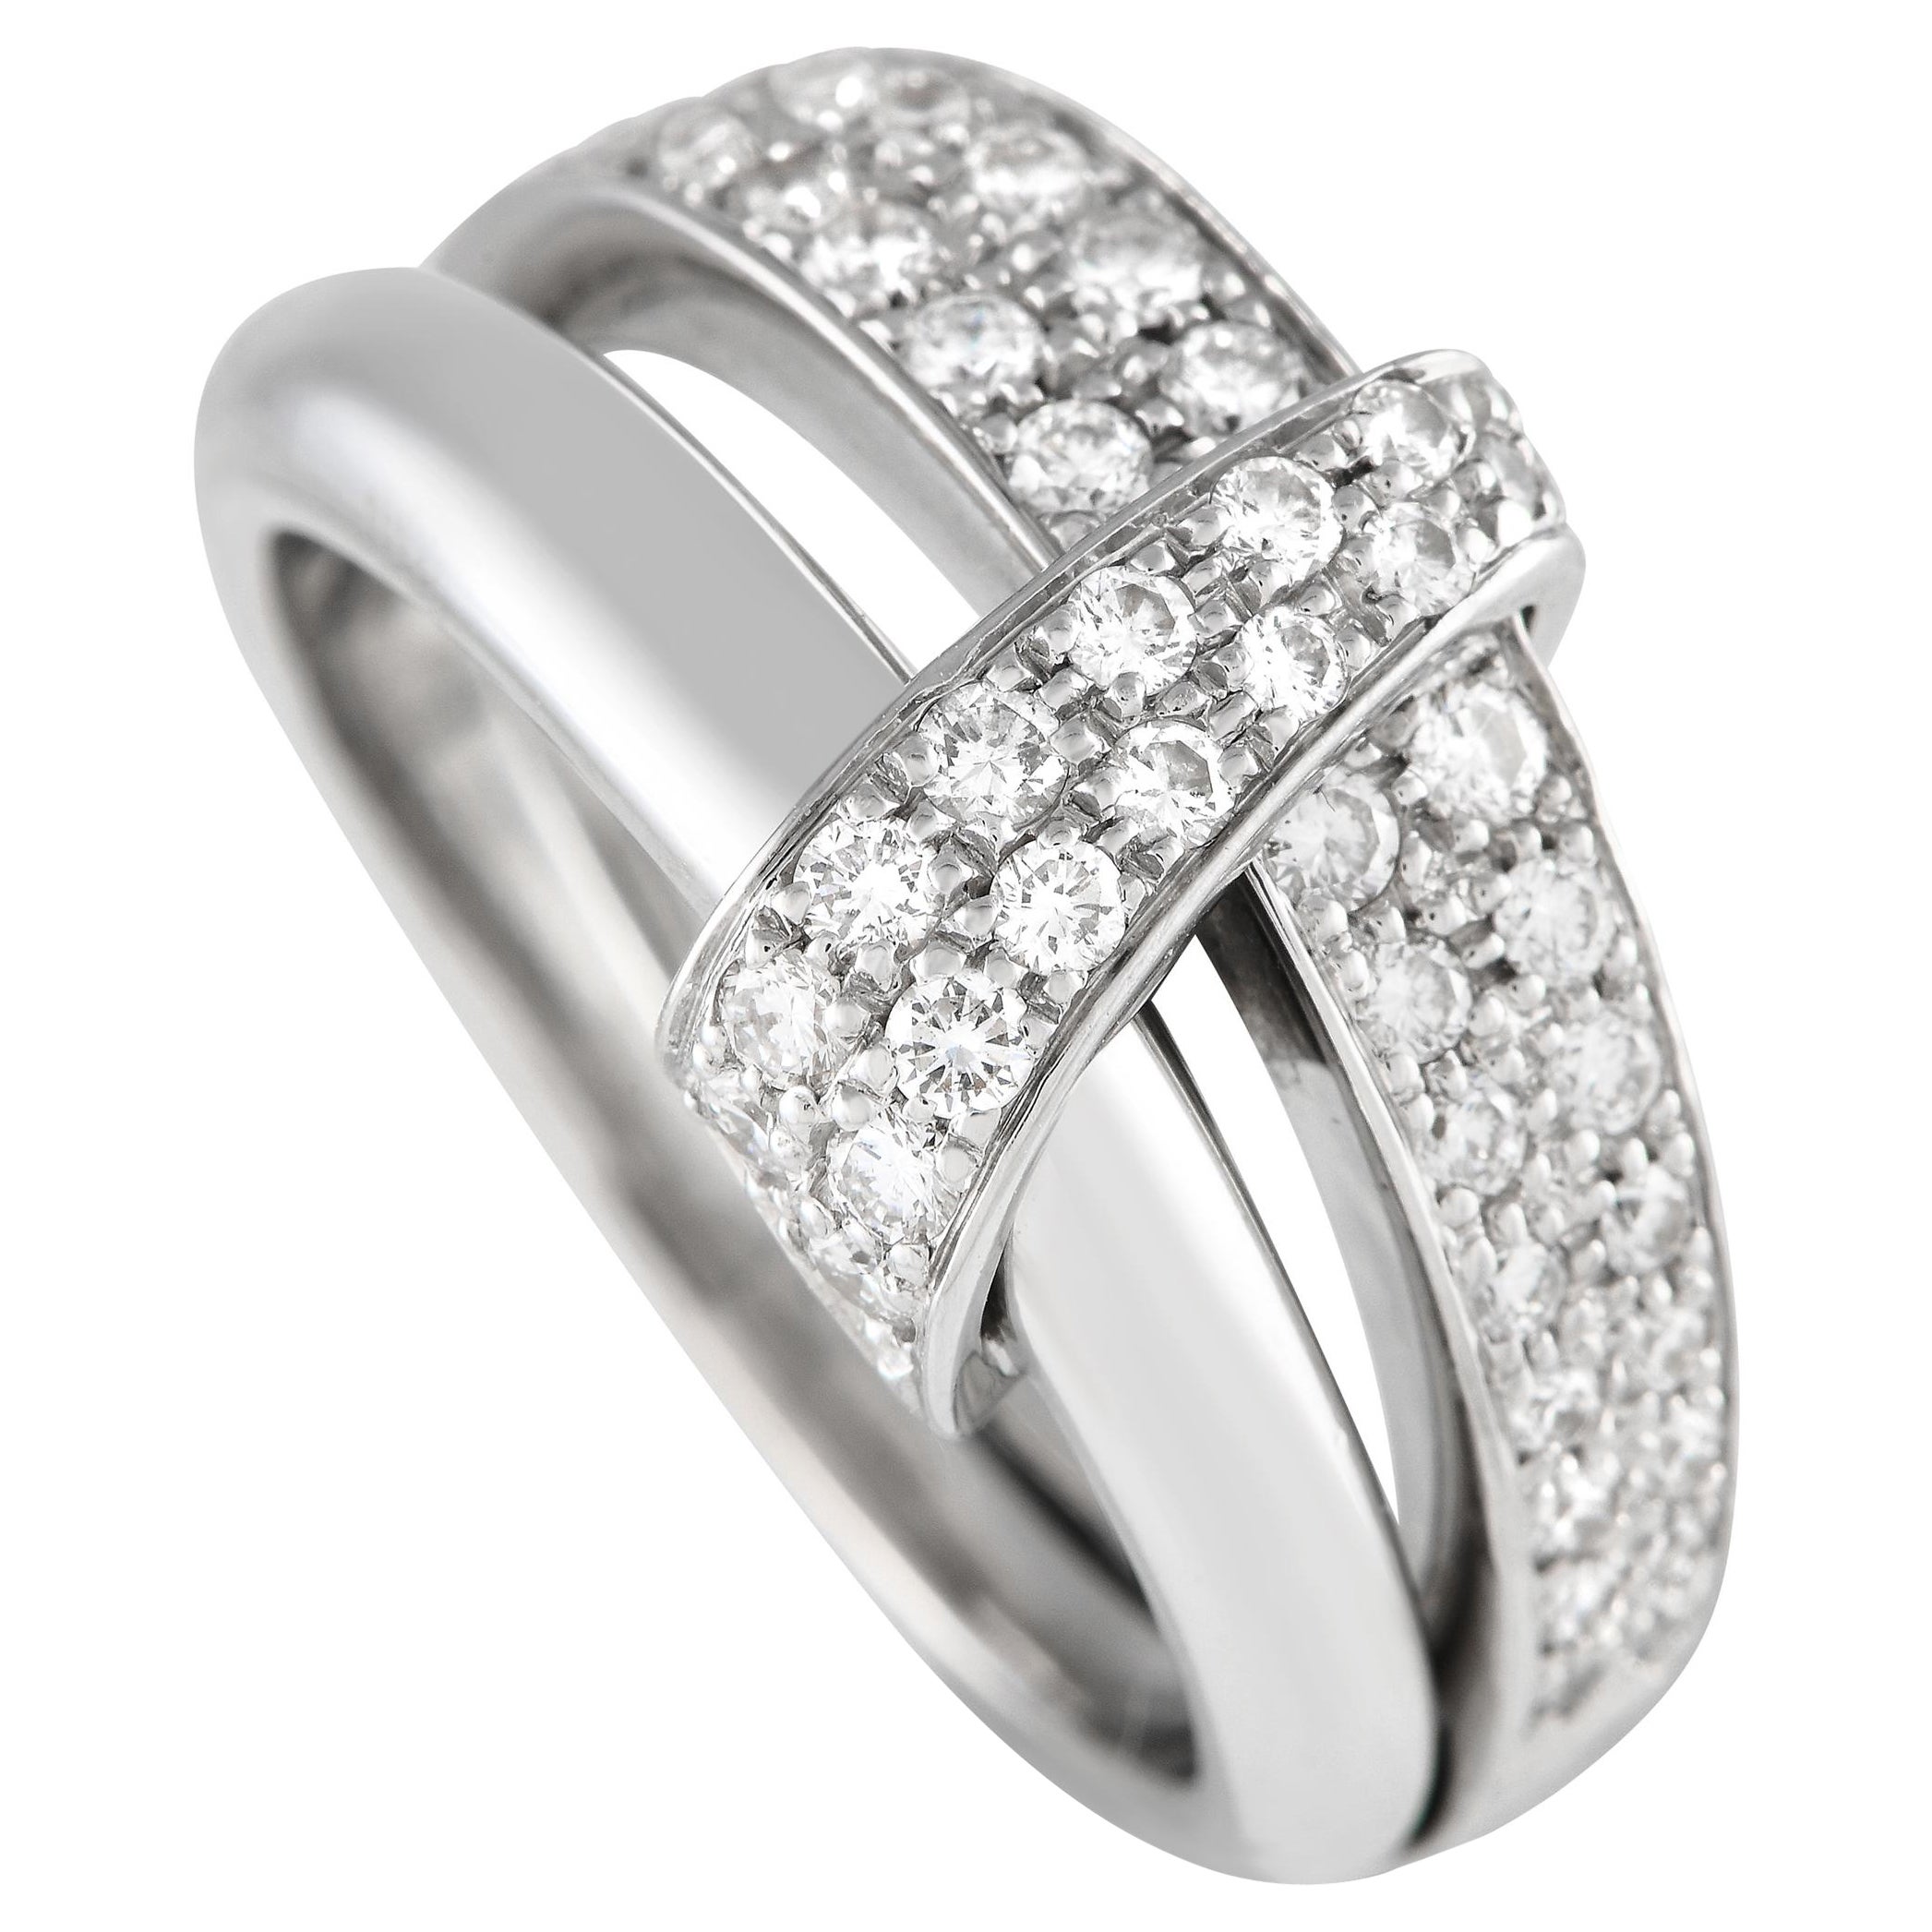 Gold Diamond Ring- Asprey 0.84 Carats Diamond Ring 18ct White Gold | eBay